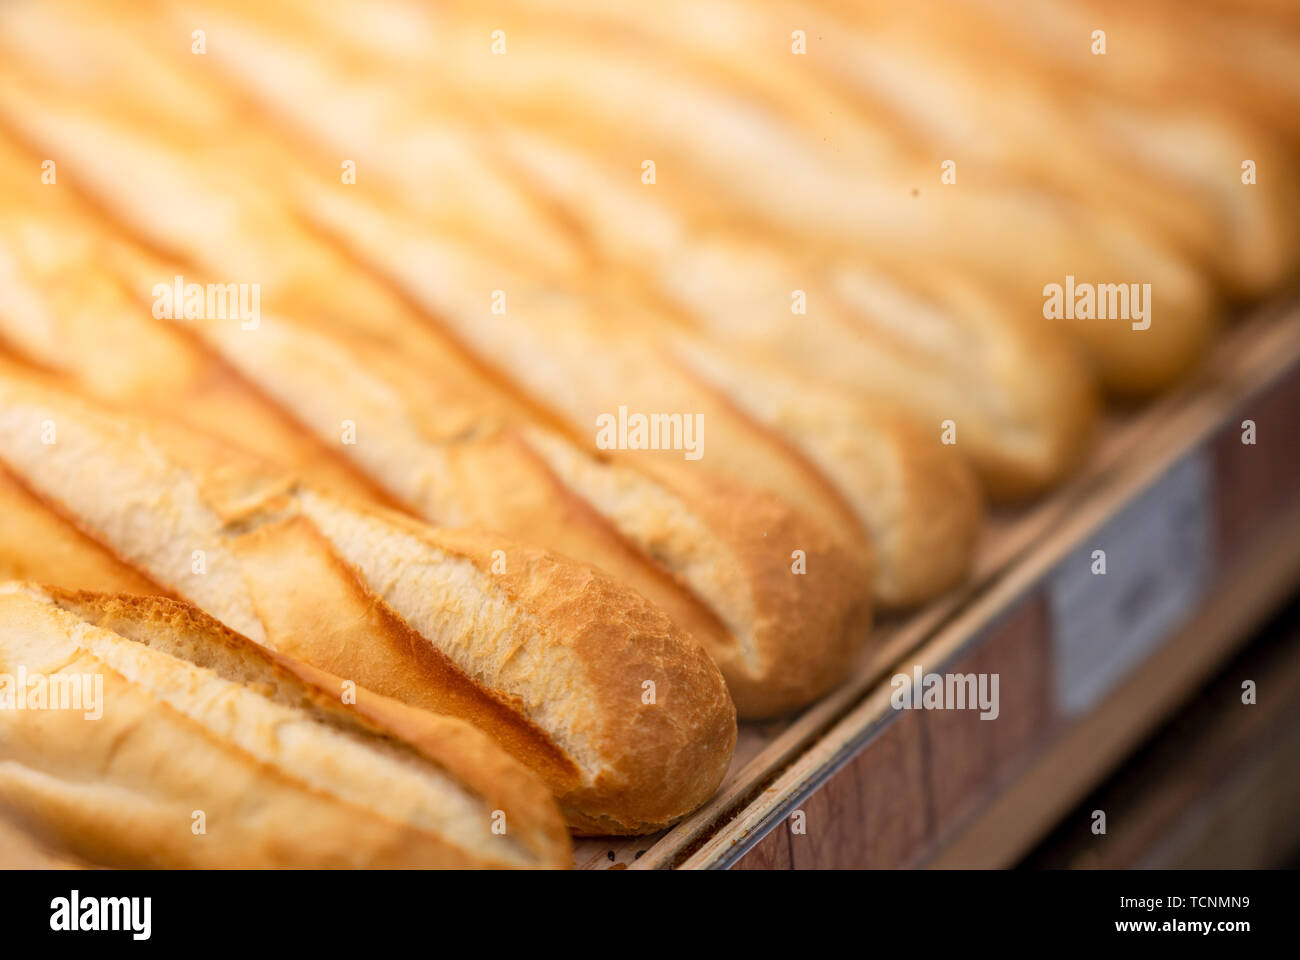 Pan fresco en el supermercado. Detalle de un fresco pan cocido en una fila en el supermercado. Foto de stock